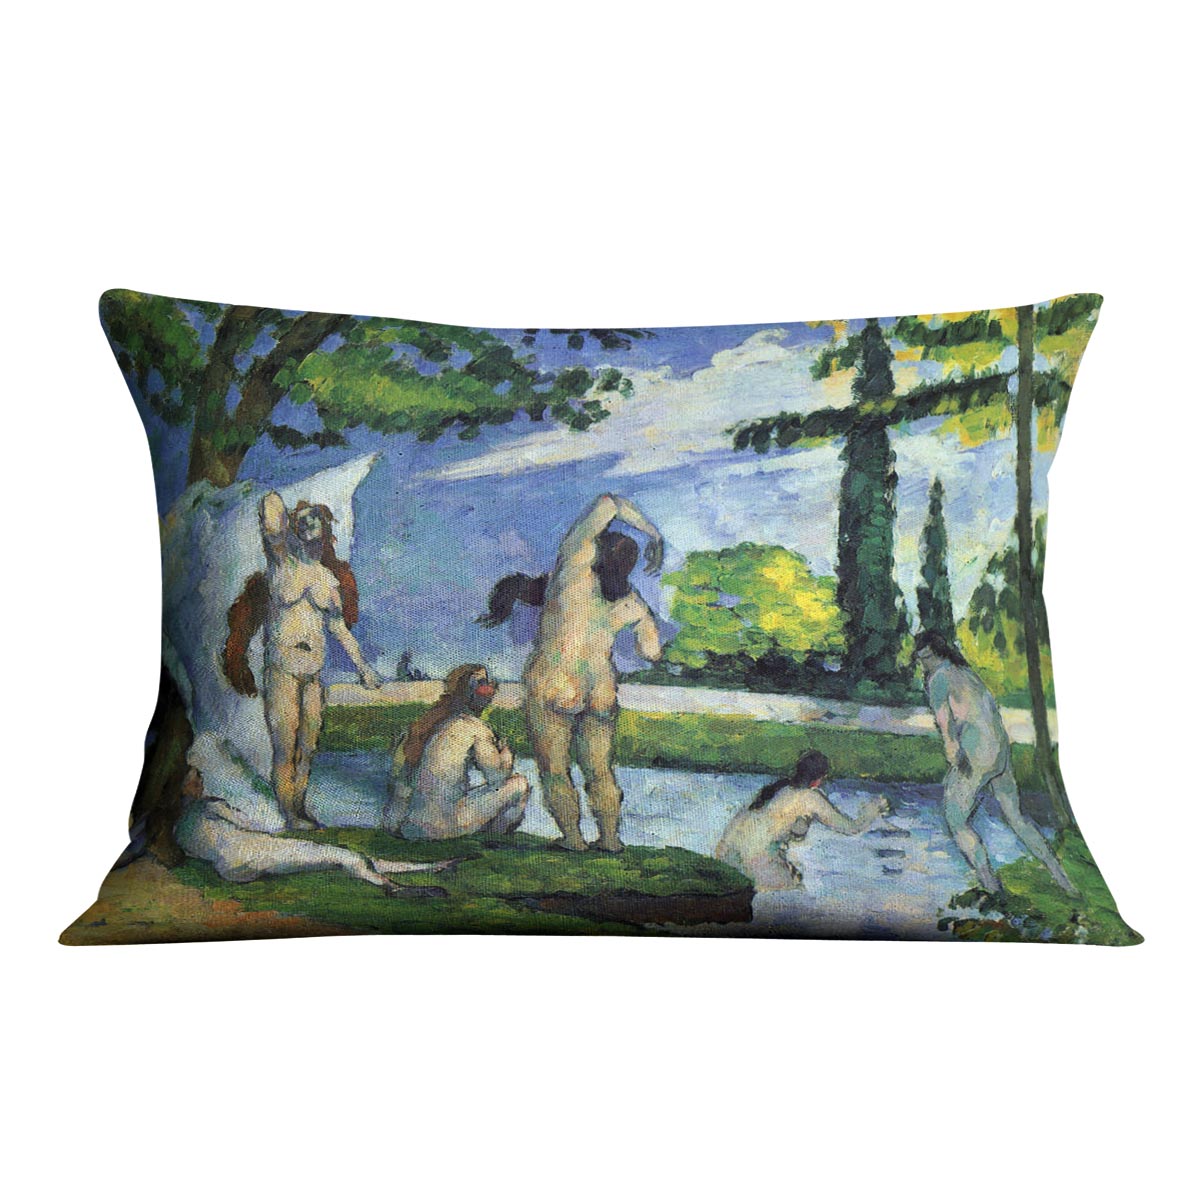 Bathers 4 by Cezanne Cushion